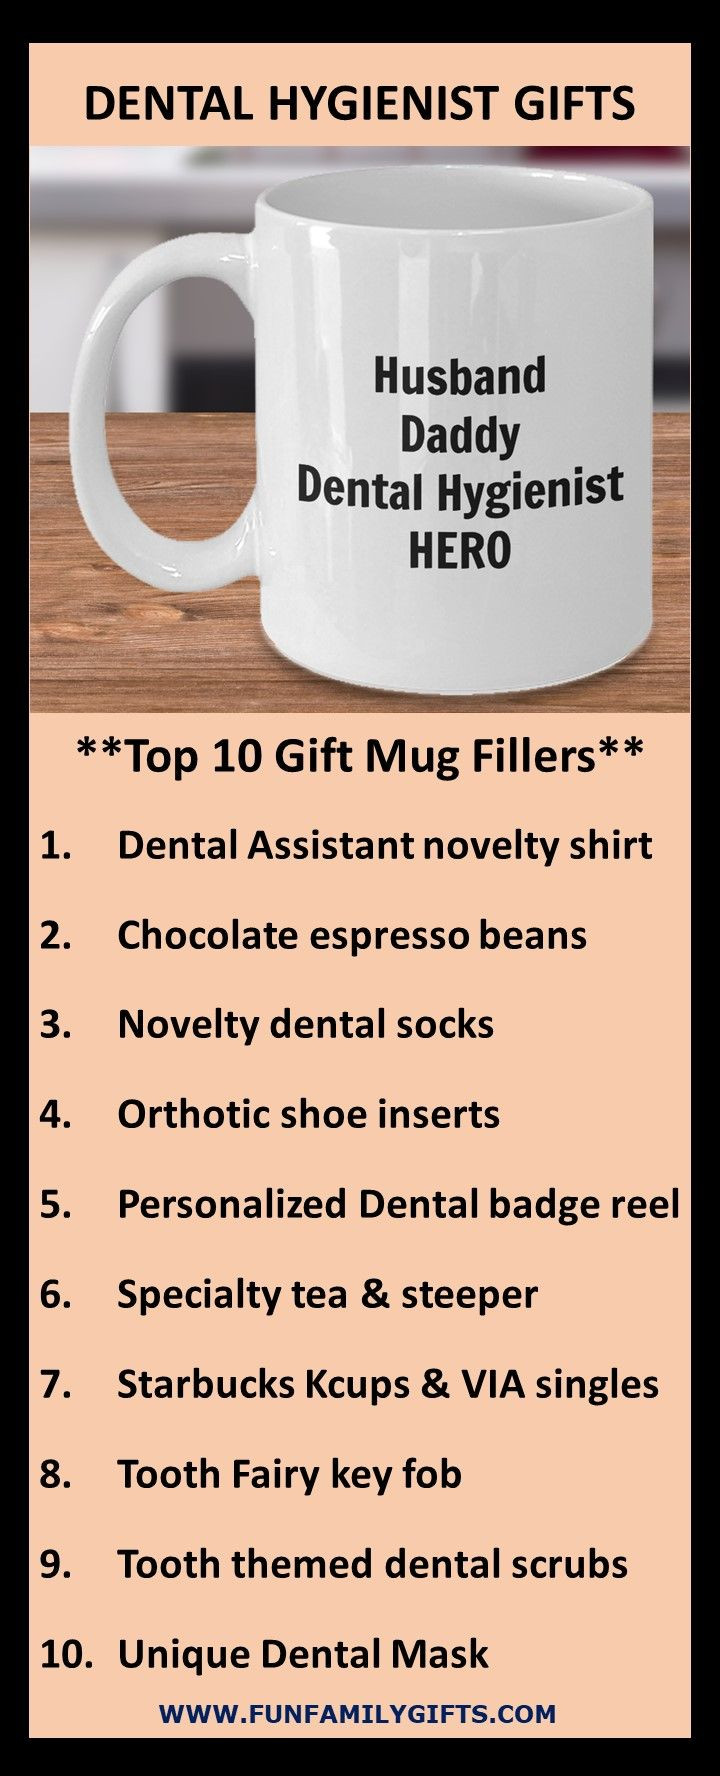 Dental Hygienist Graduation Gift Ideas
 The best t ideas for a Dental Hygienist Perfect for